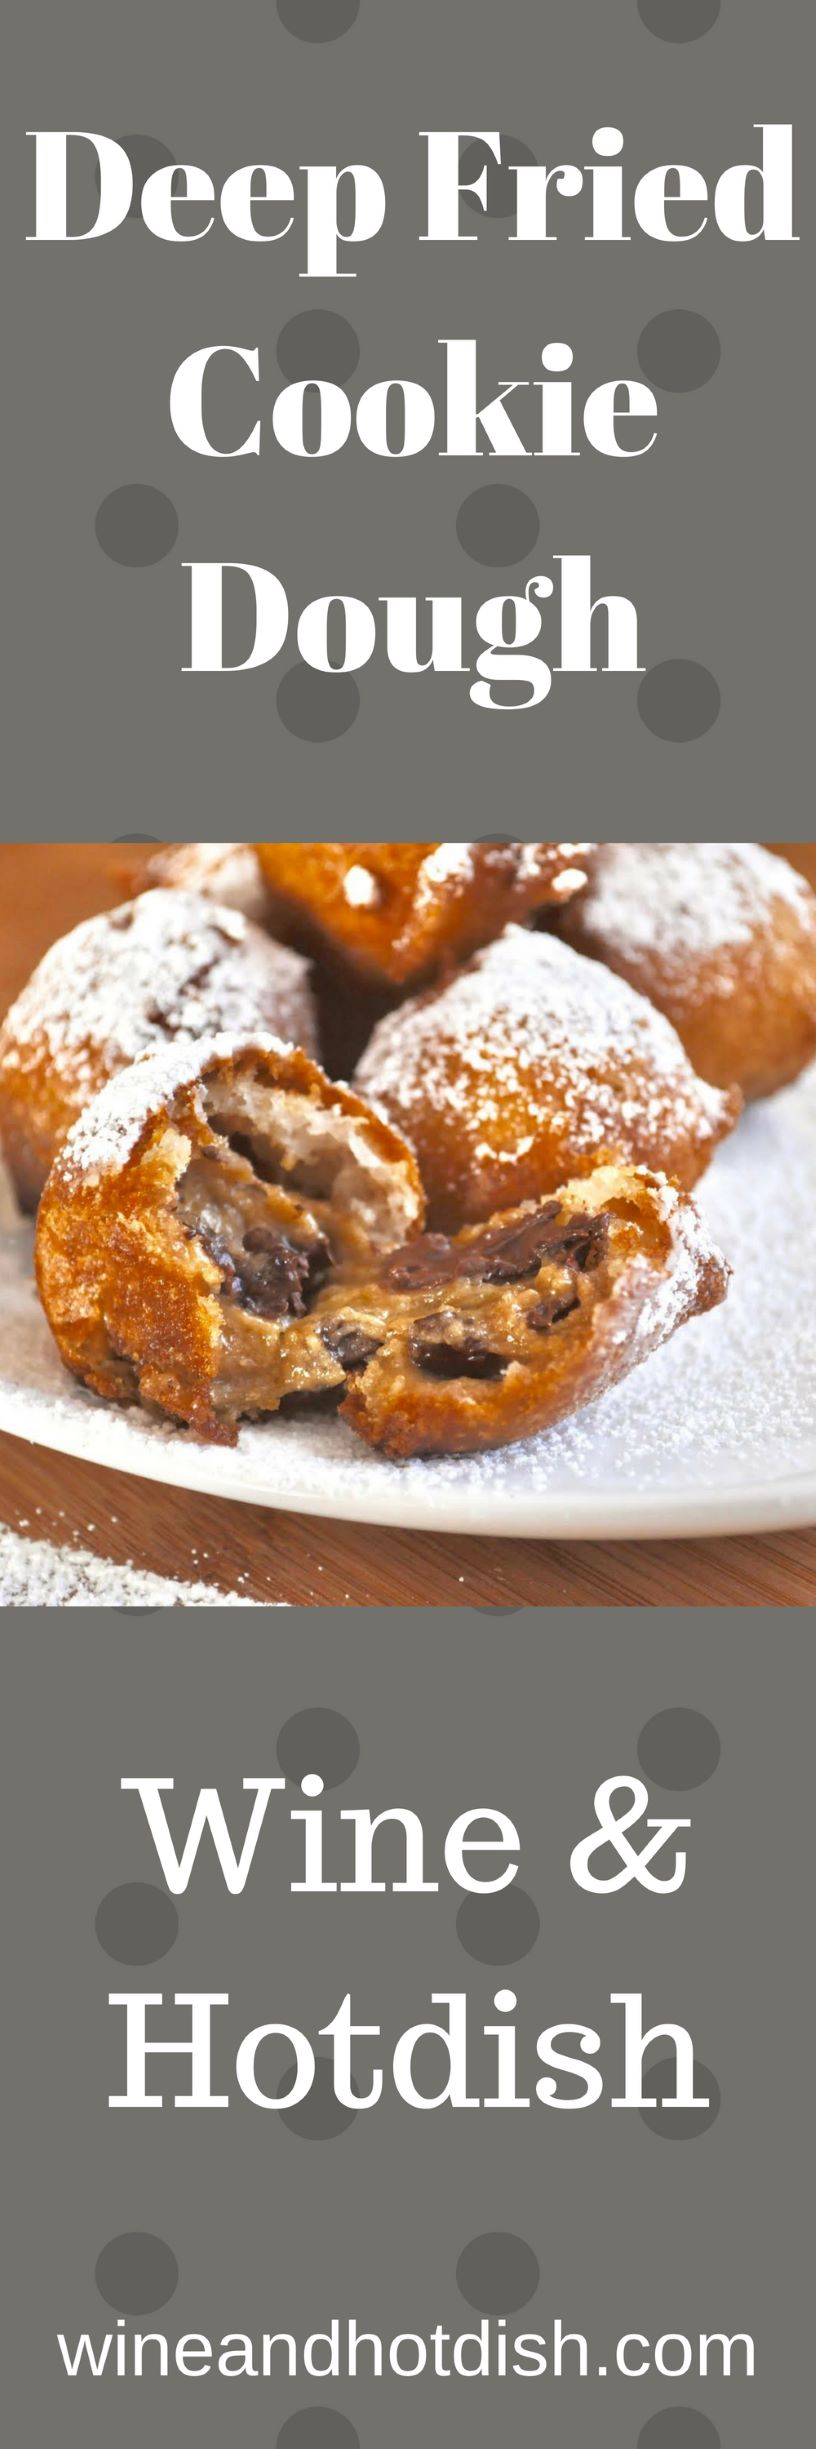 http://wineandhotdish.com/wp-content/uploads/2018/08/Deep-Fried-Cookie-Dough-Pin-1.jpg